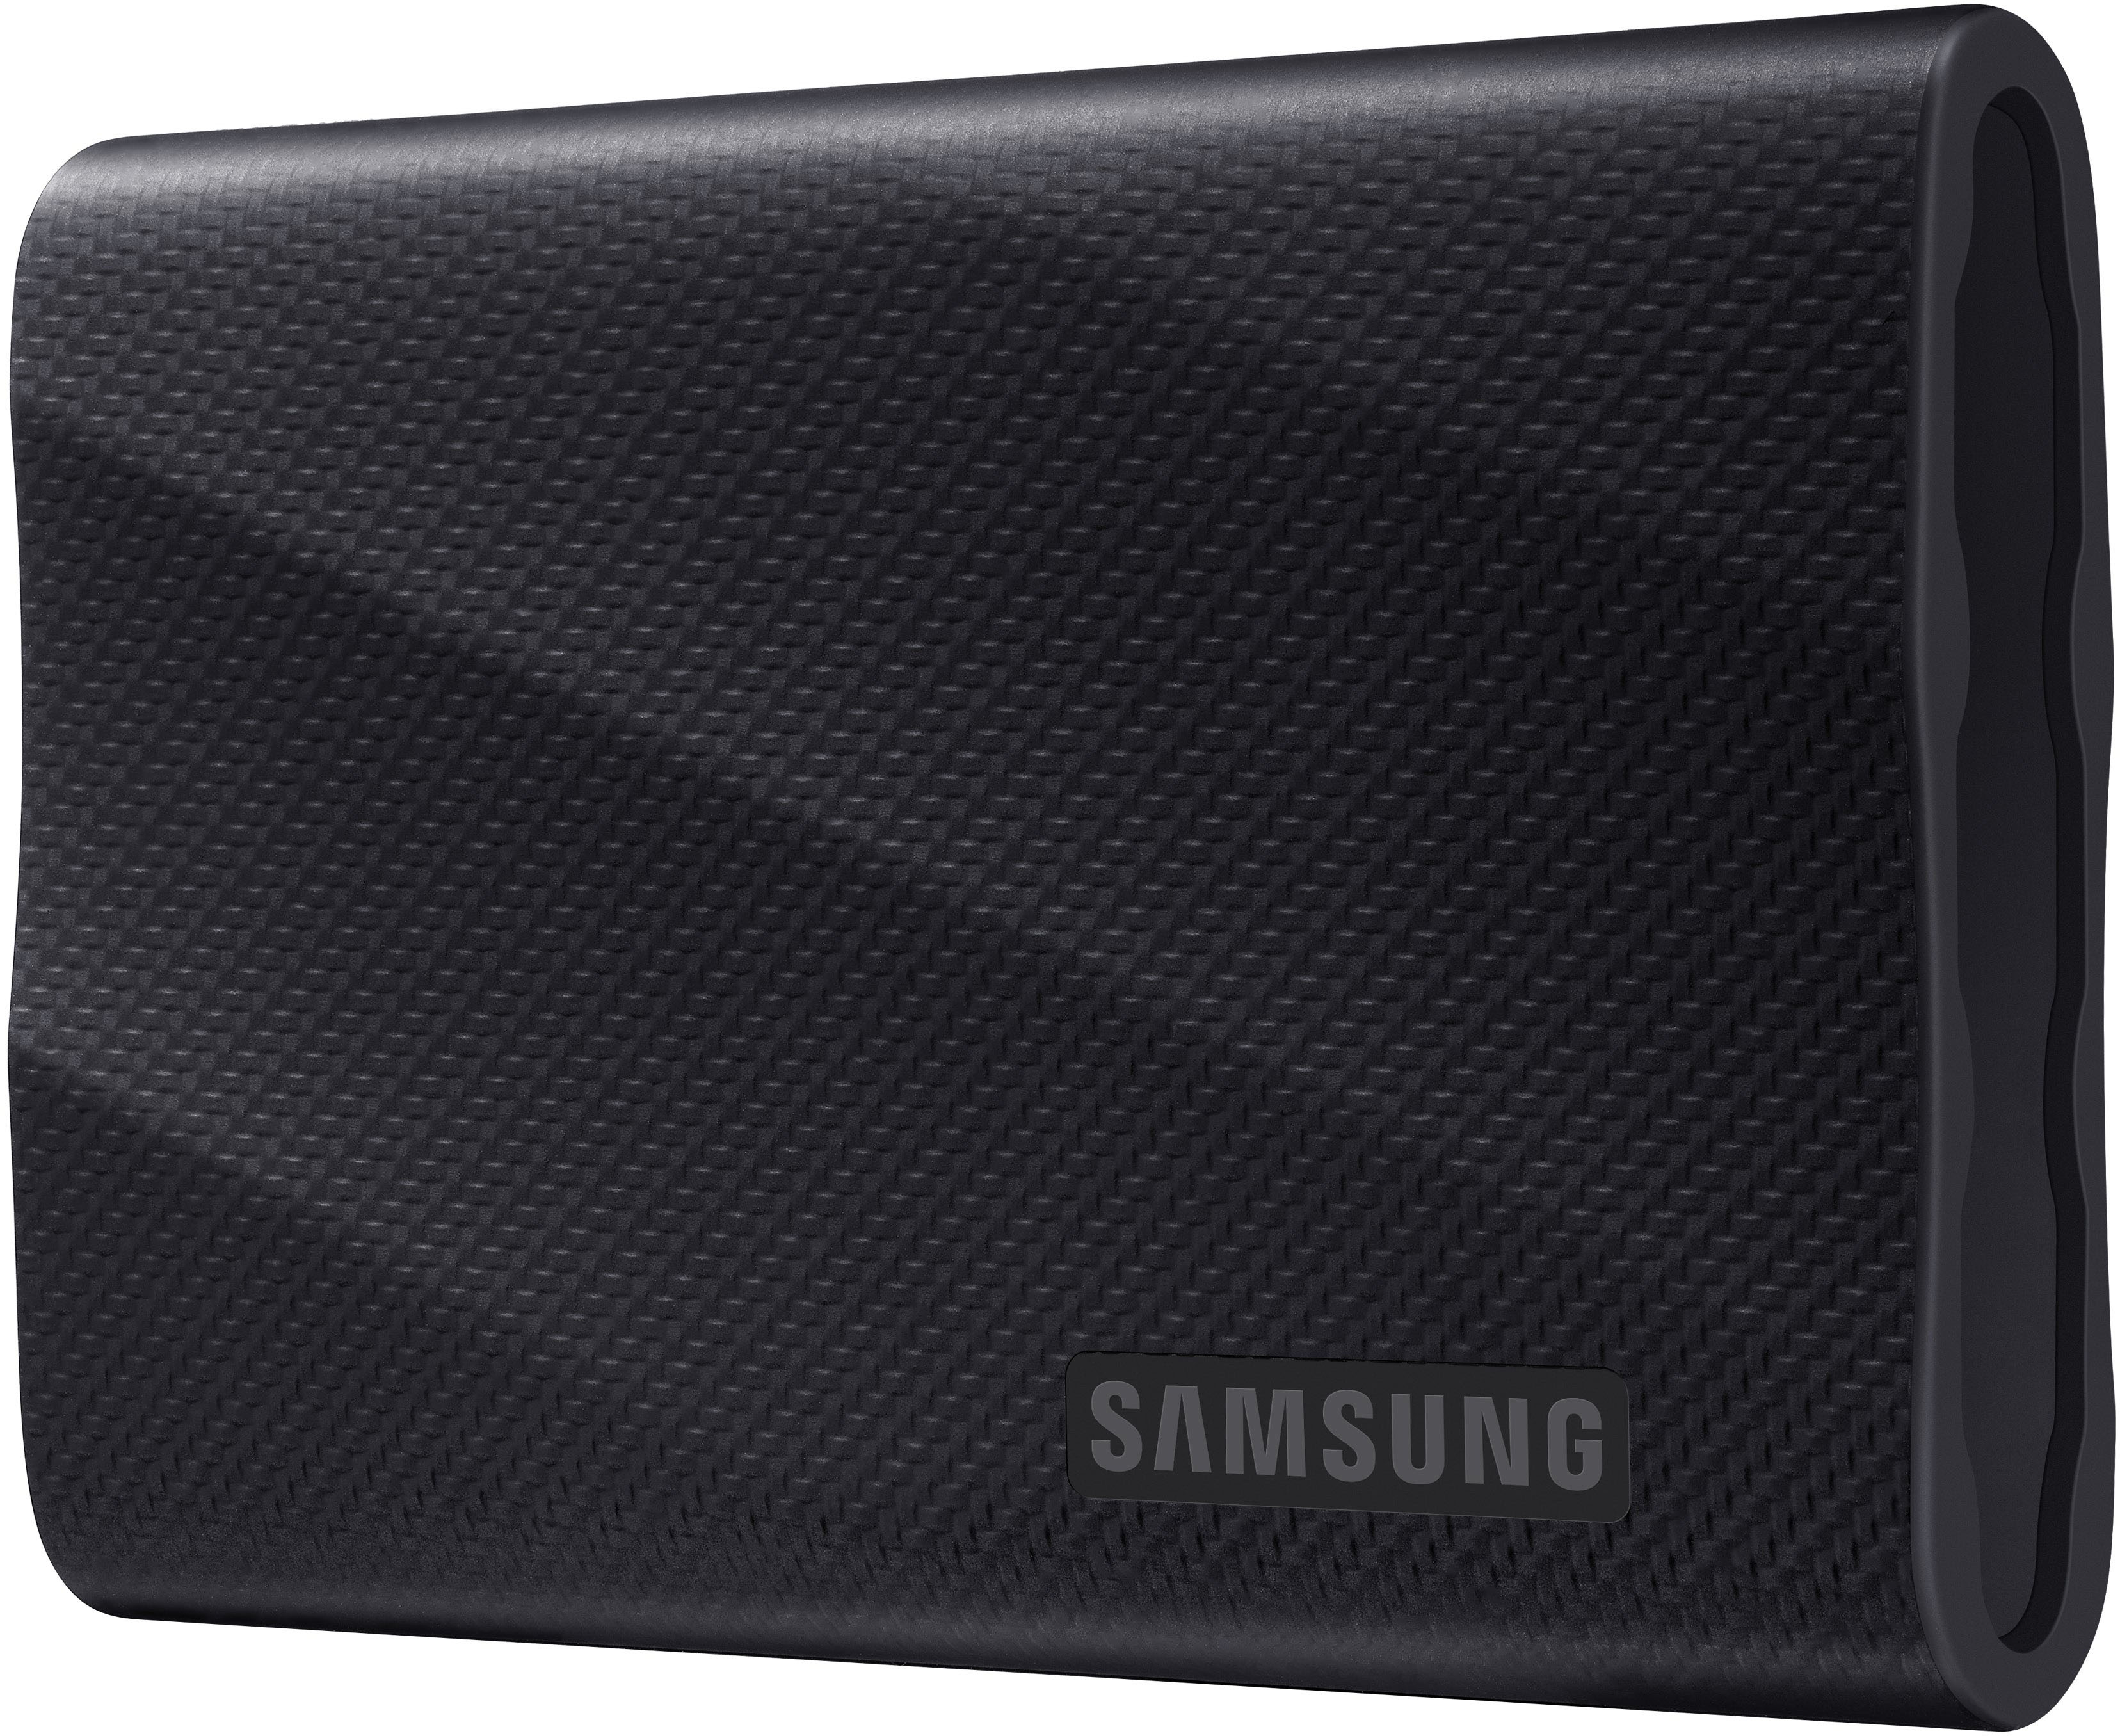 Samsung's new Portable SSD uses Thunderbolt 3 for lightning-fast